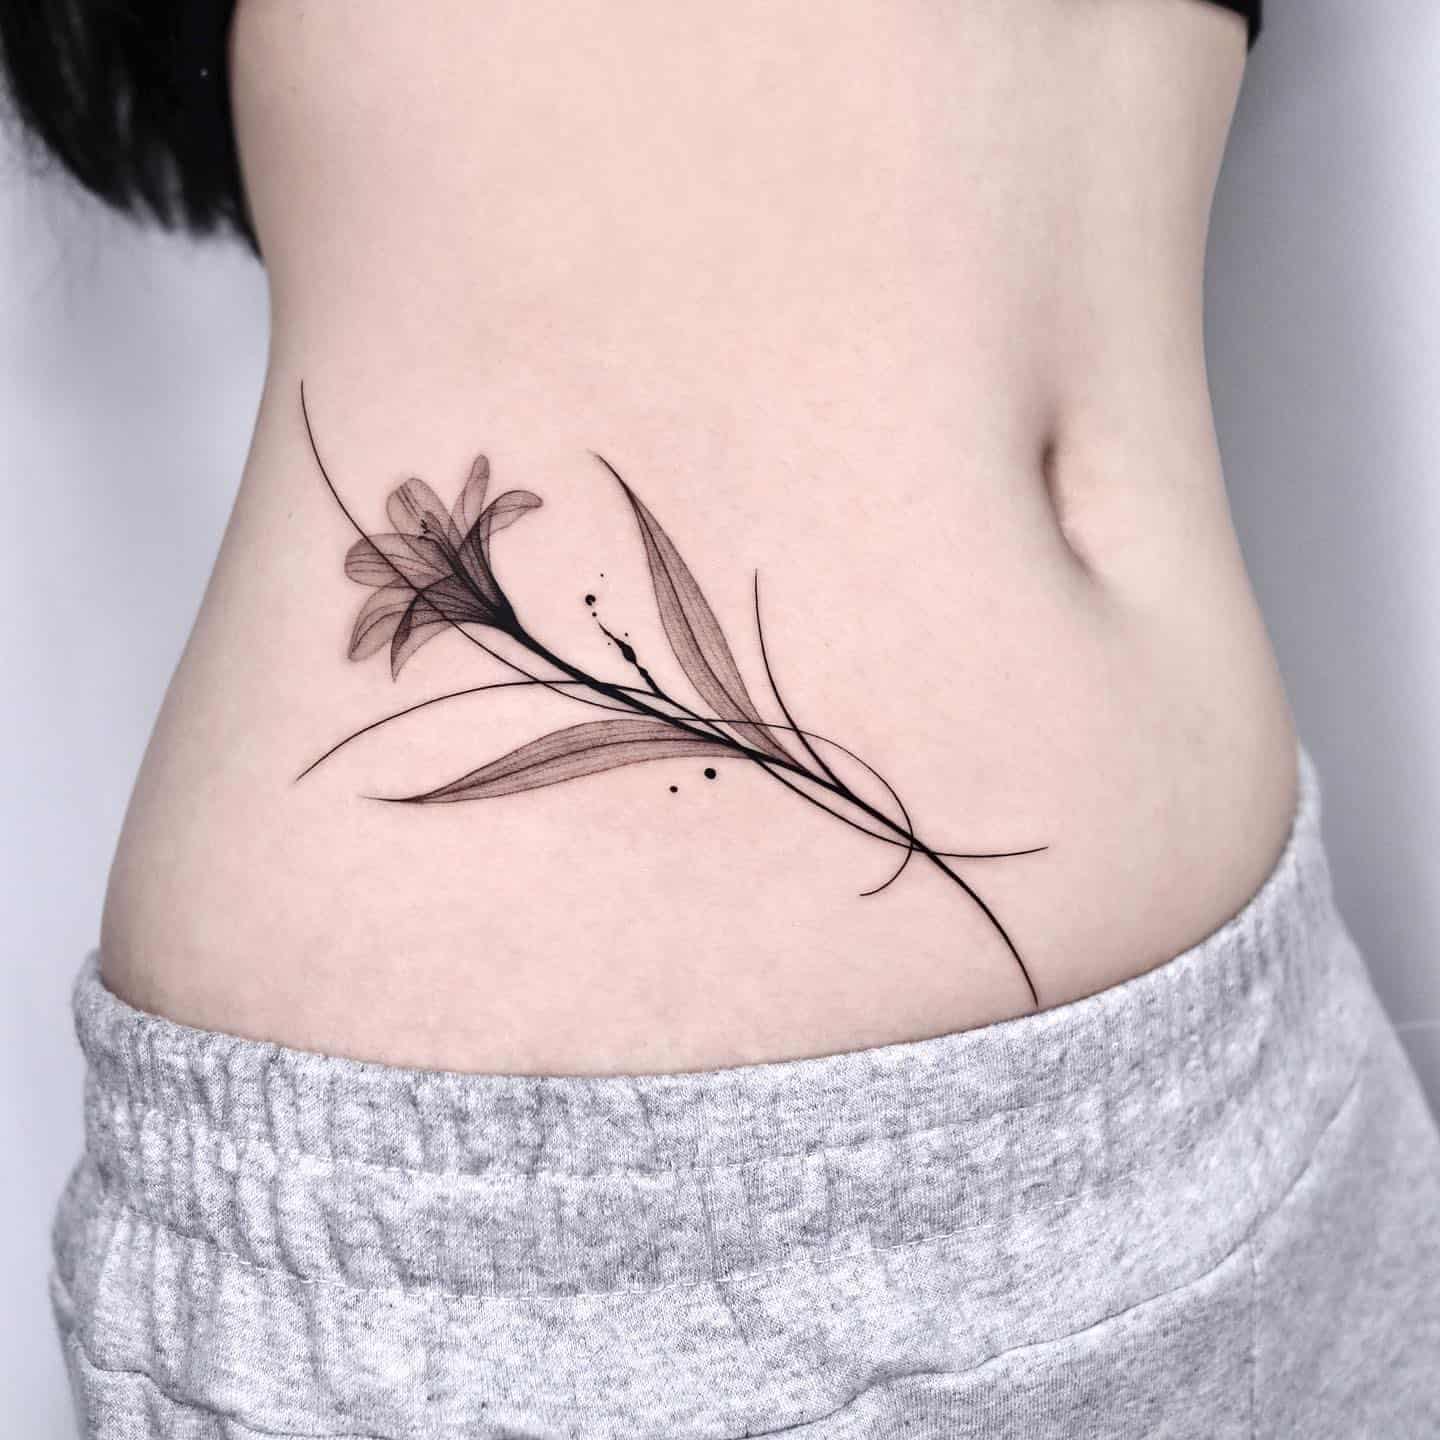 Rose tattoo by Compulsiva Tattoo | Post 25394